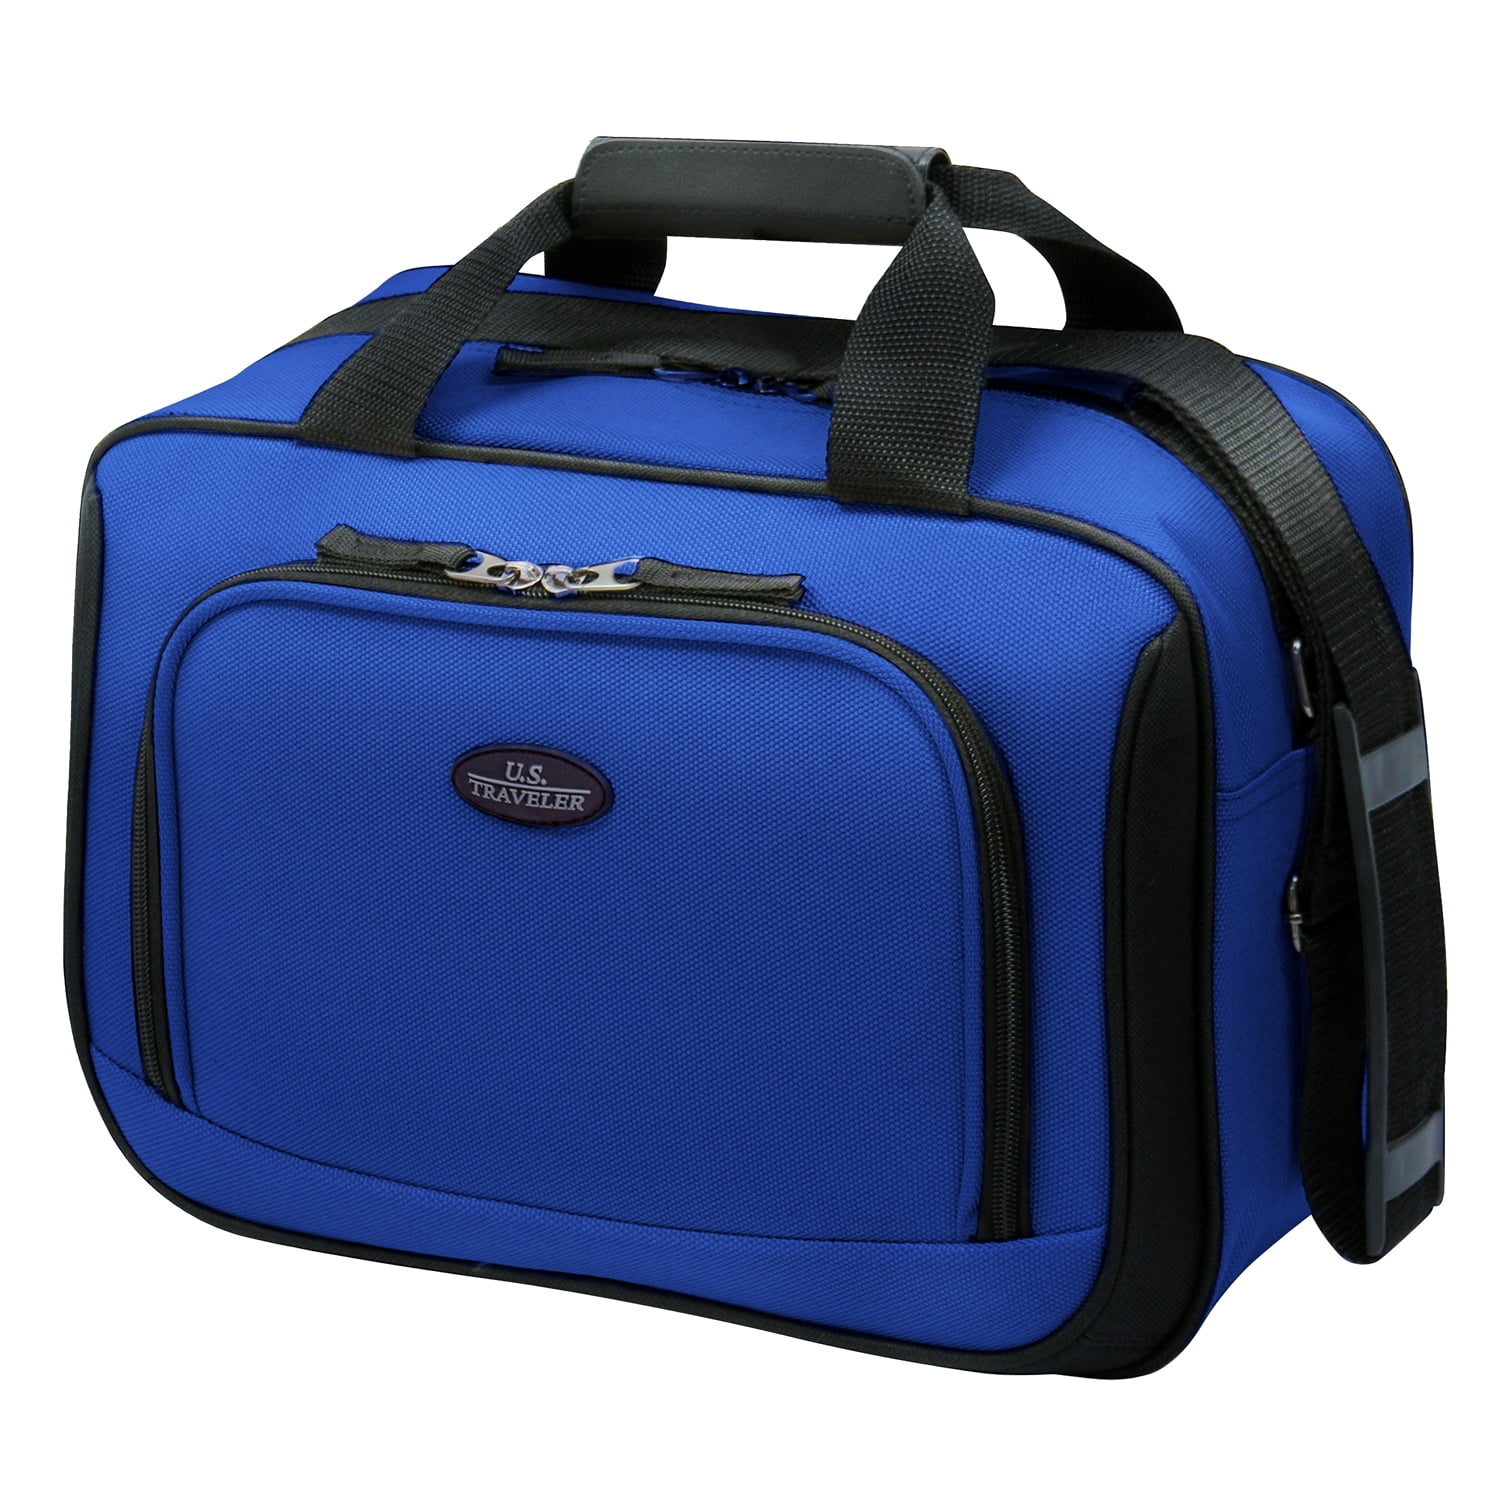  U.S. Traveler Rio Rugged Fabric Luggage, Royal Blue, 2 Wheel